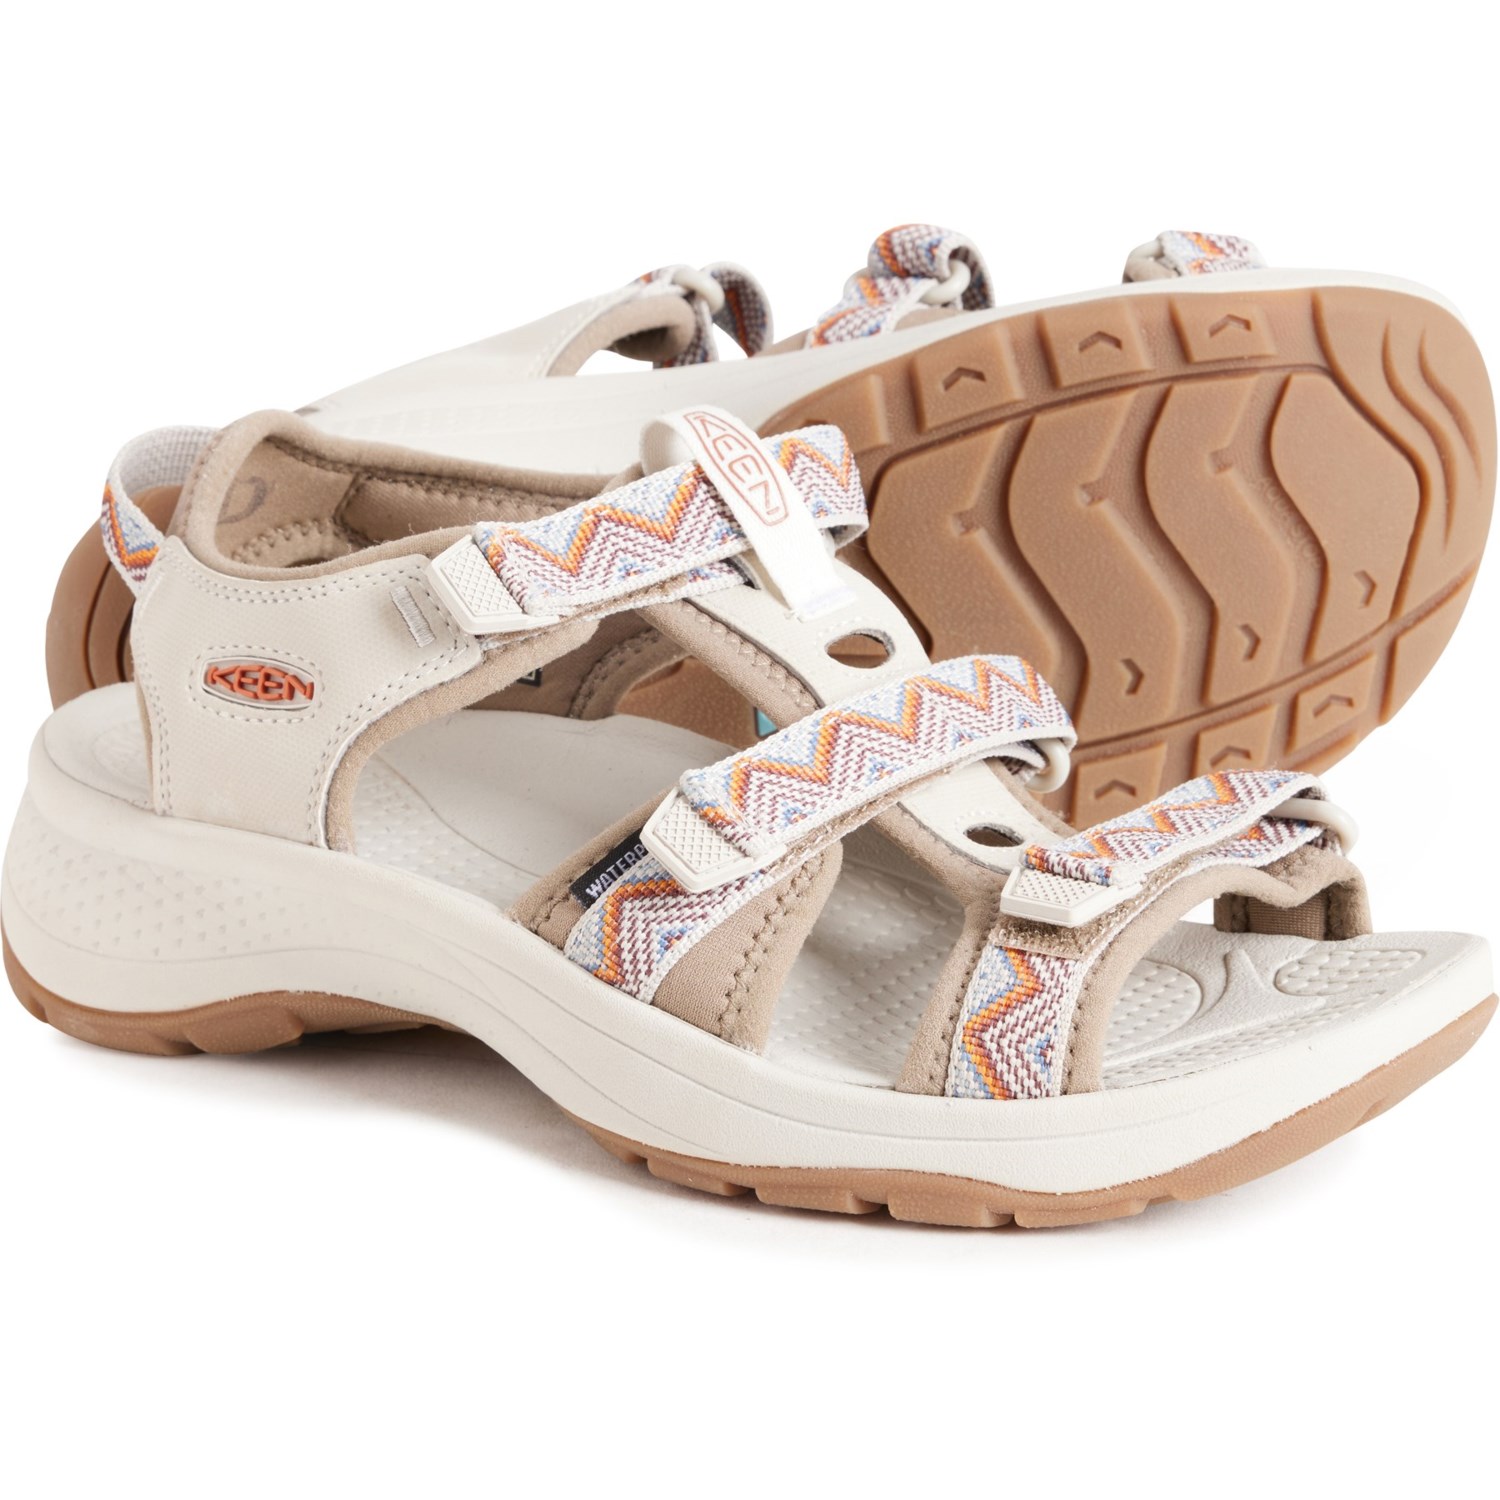 Keen Astoria West Open Toe Sport Sandals (For Women) - Save 33%